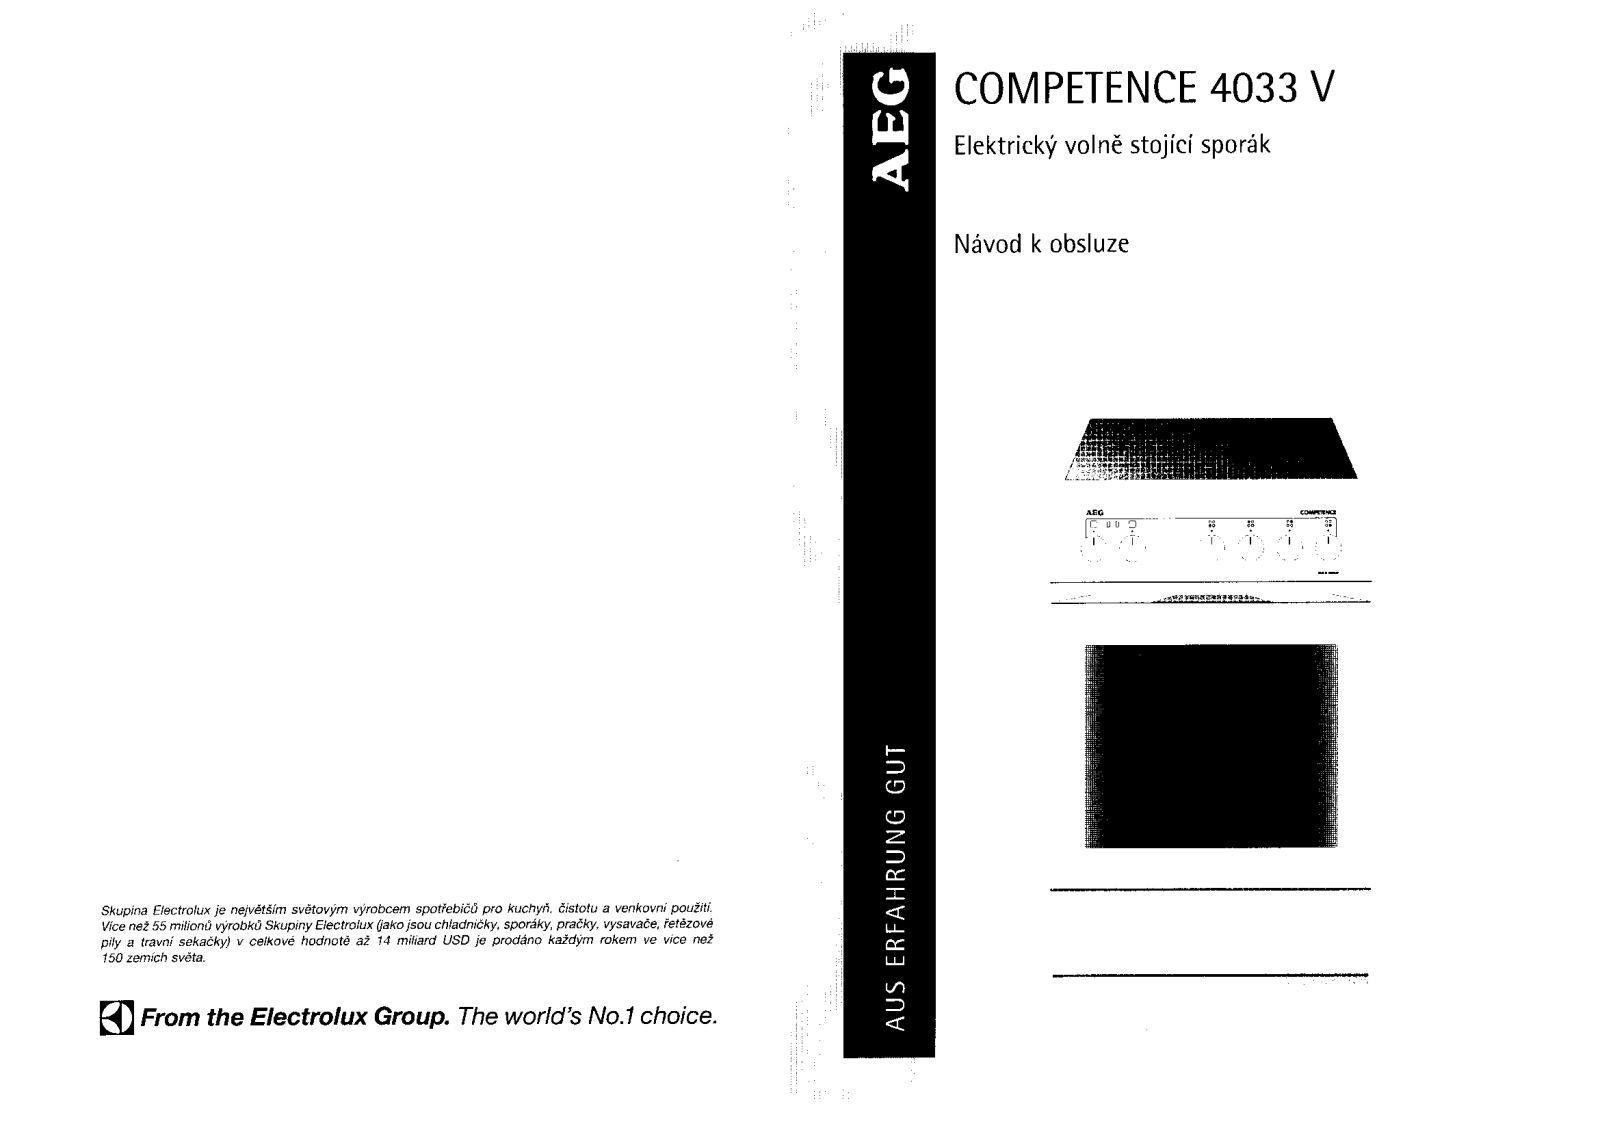 AEG COMPETENCE 4033 V User Manual